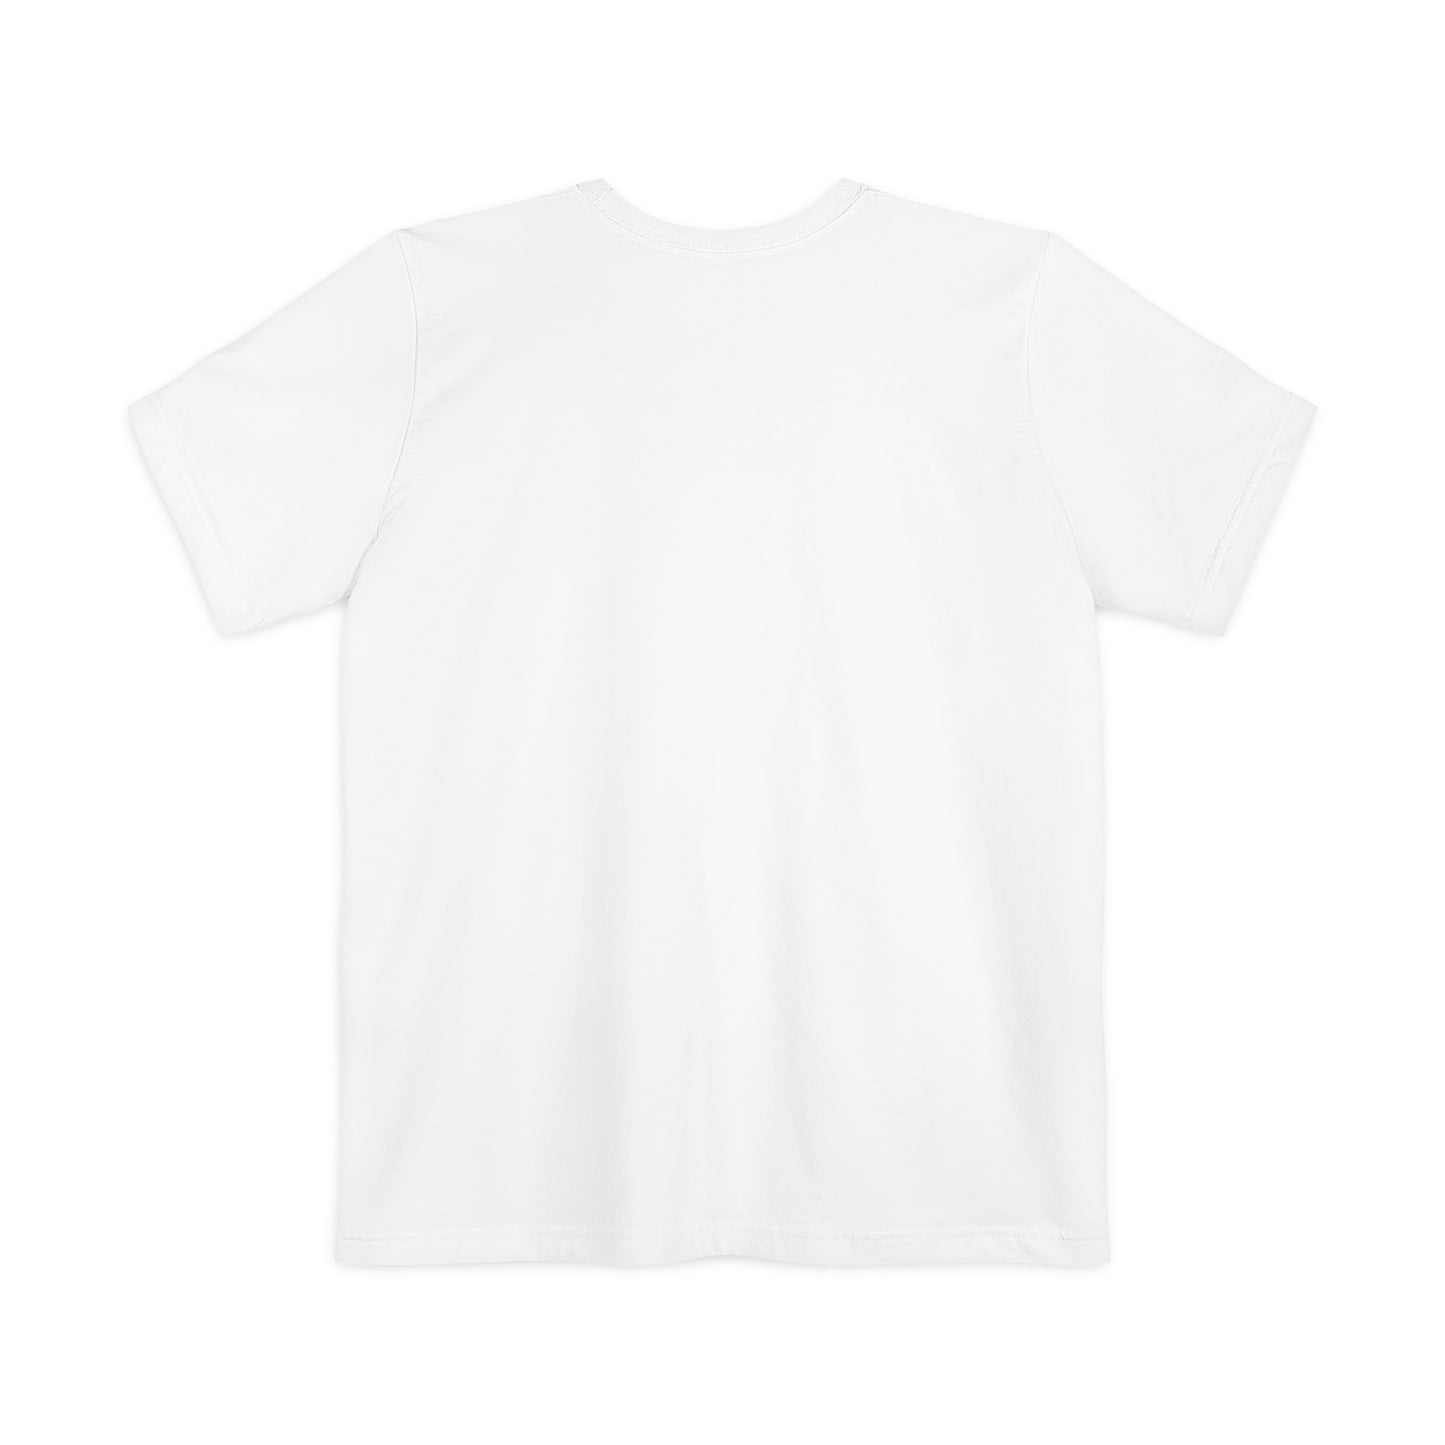 Proudly Introverted Unisex Pocket T-Shirt